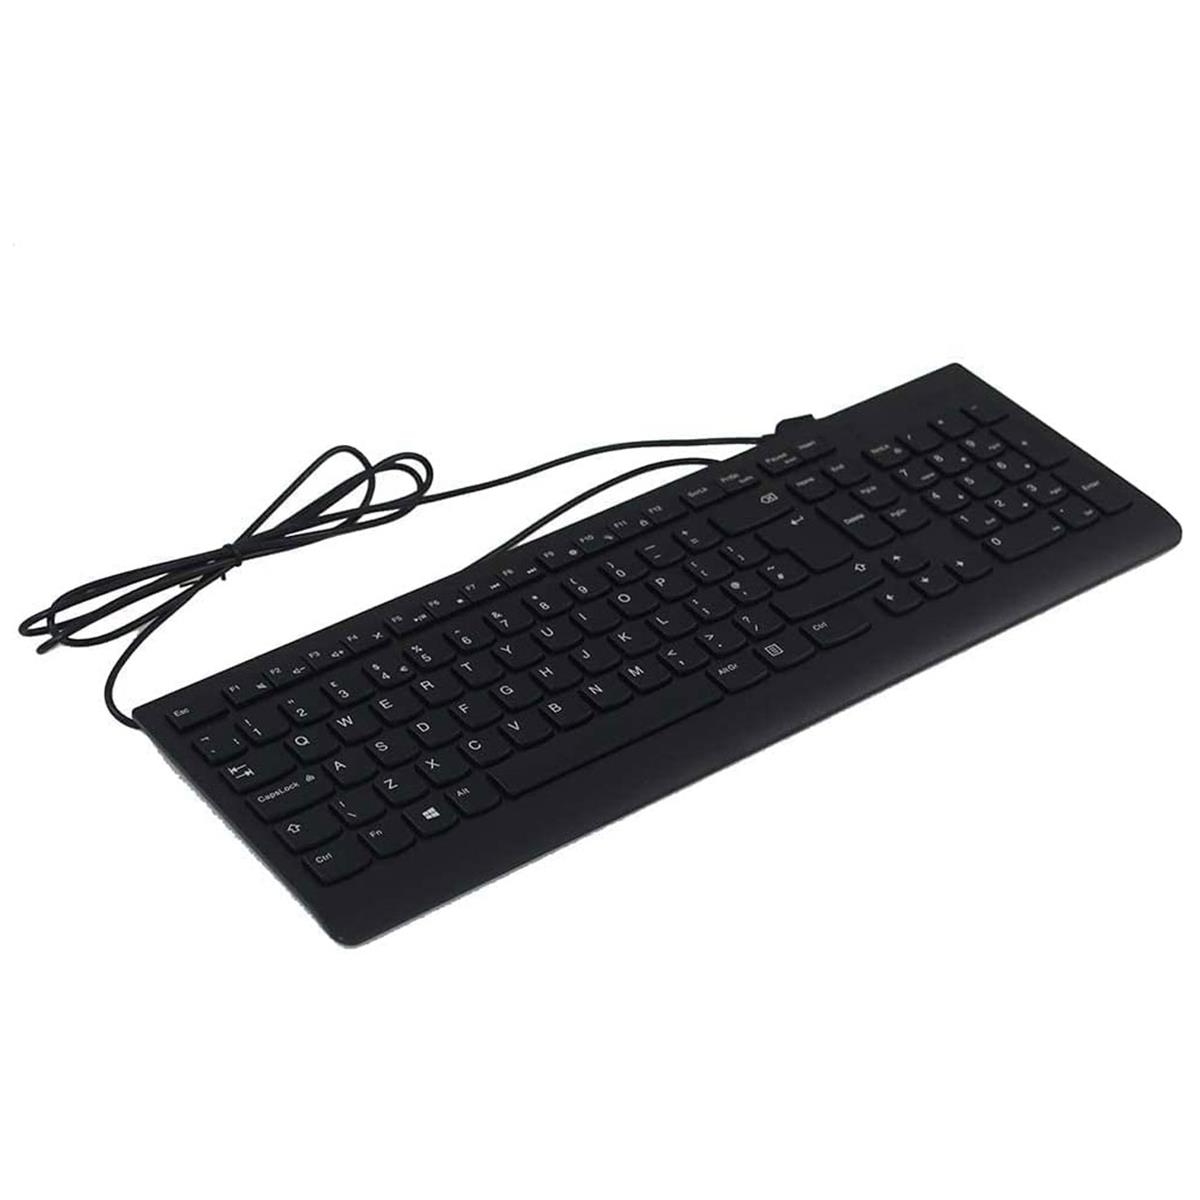 Image of Lenovo 300 Wired USB Keyboard